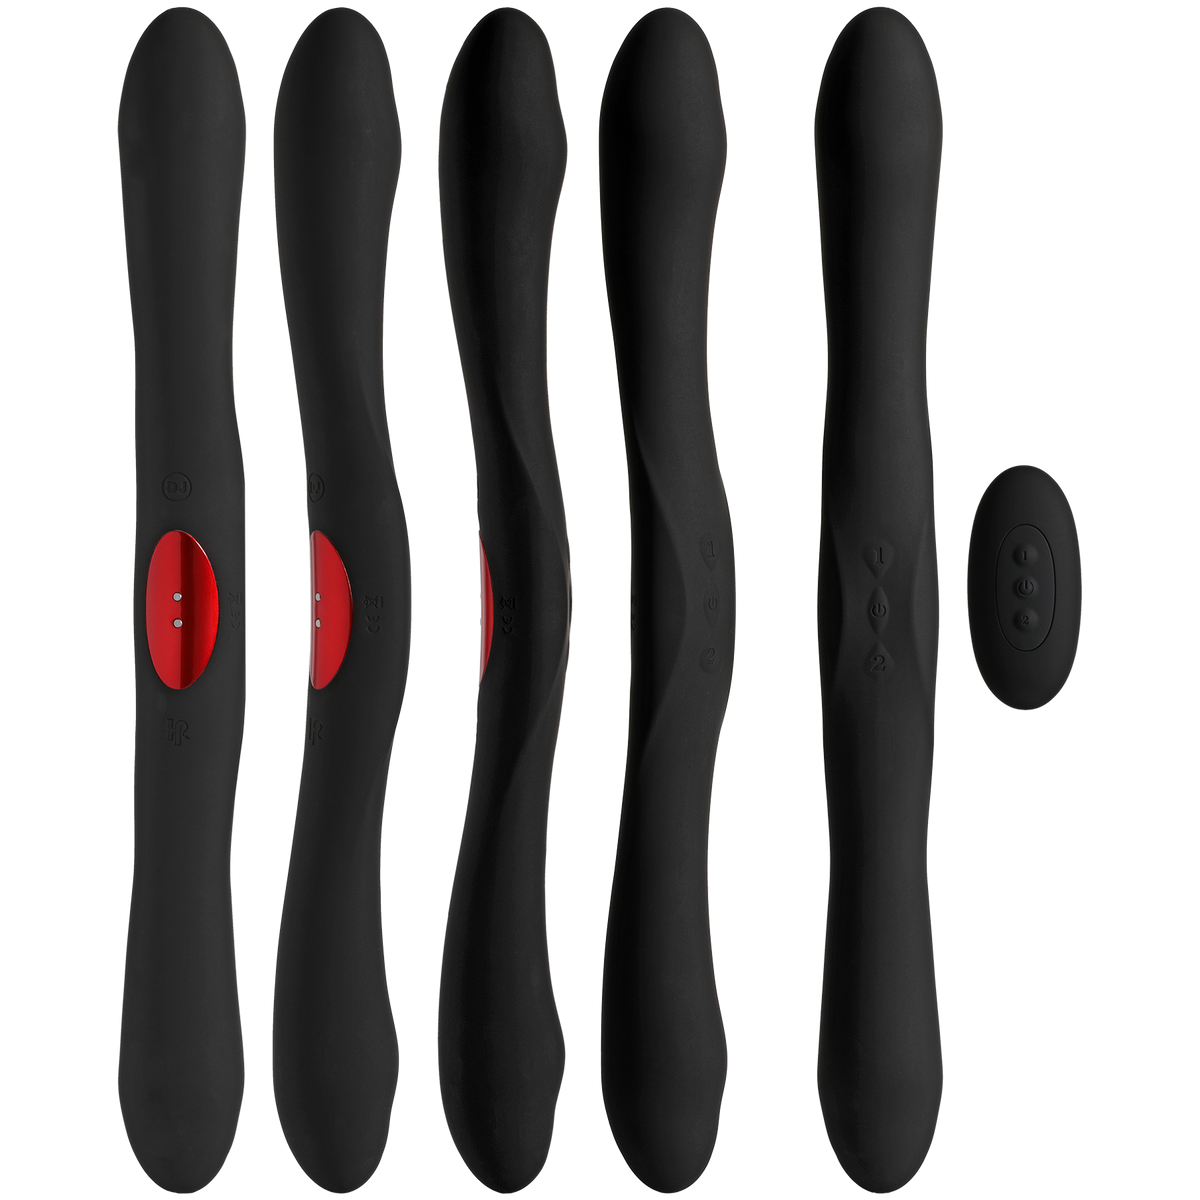 Doc Johnson Kink - Dual Flex Silicone Vibrator - Black with Red